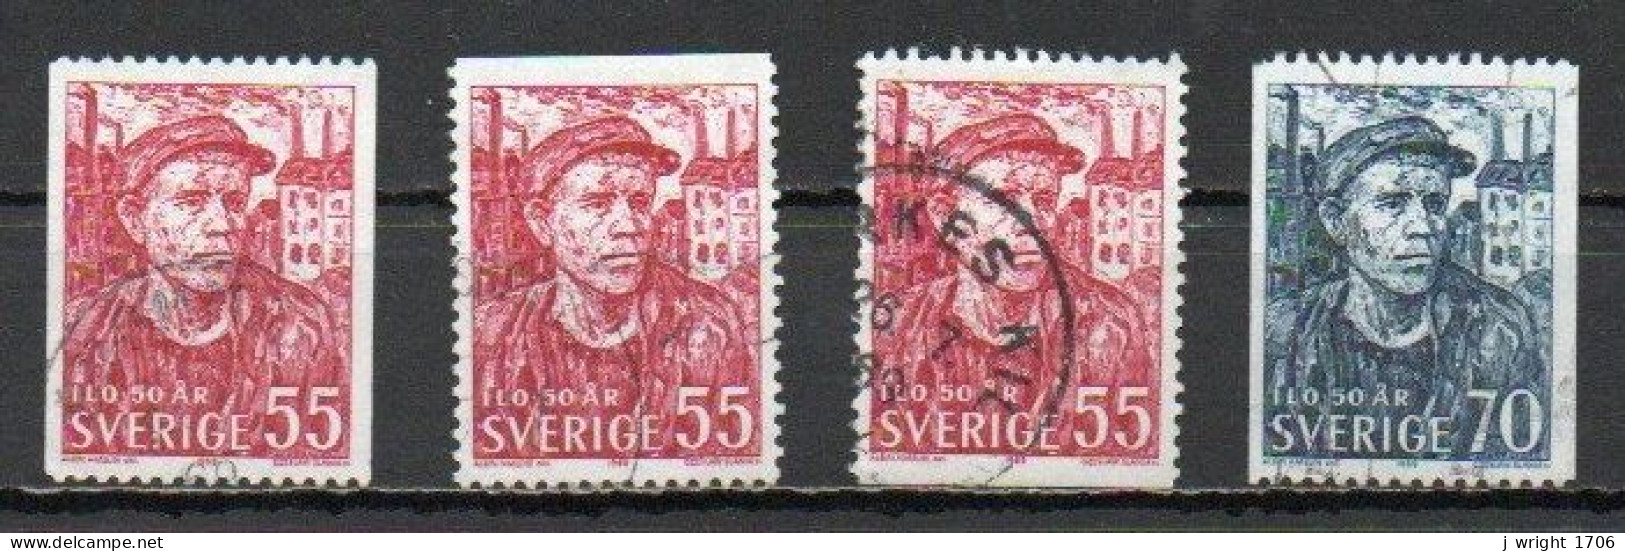 Sweden, 1969, ILO 50th Anniv, Set, USED - Gebruikt